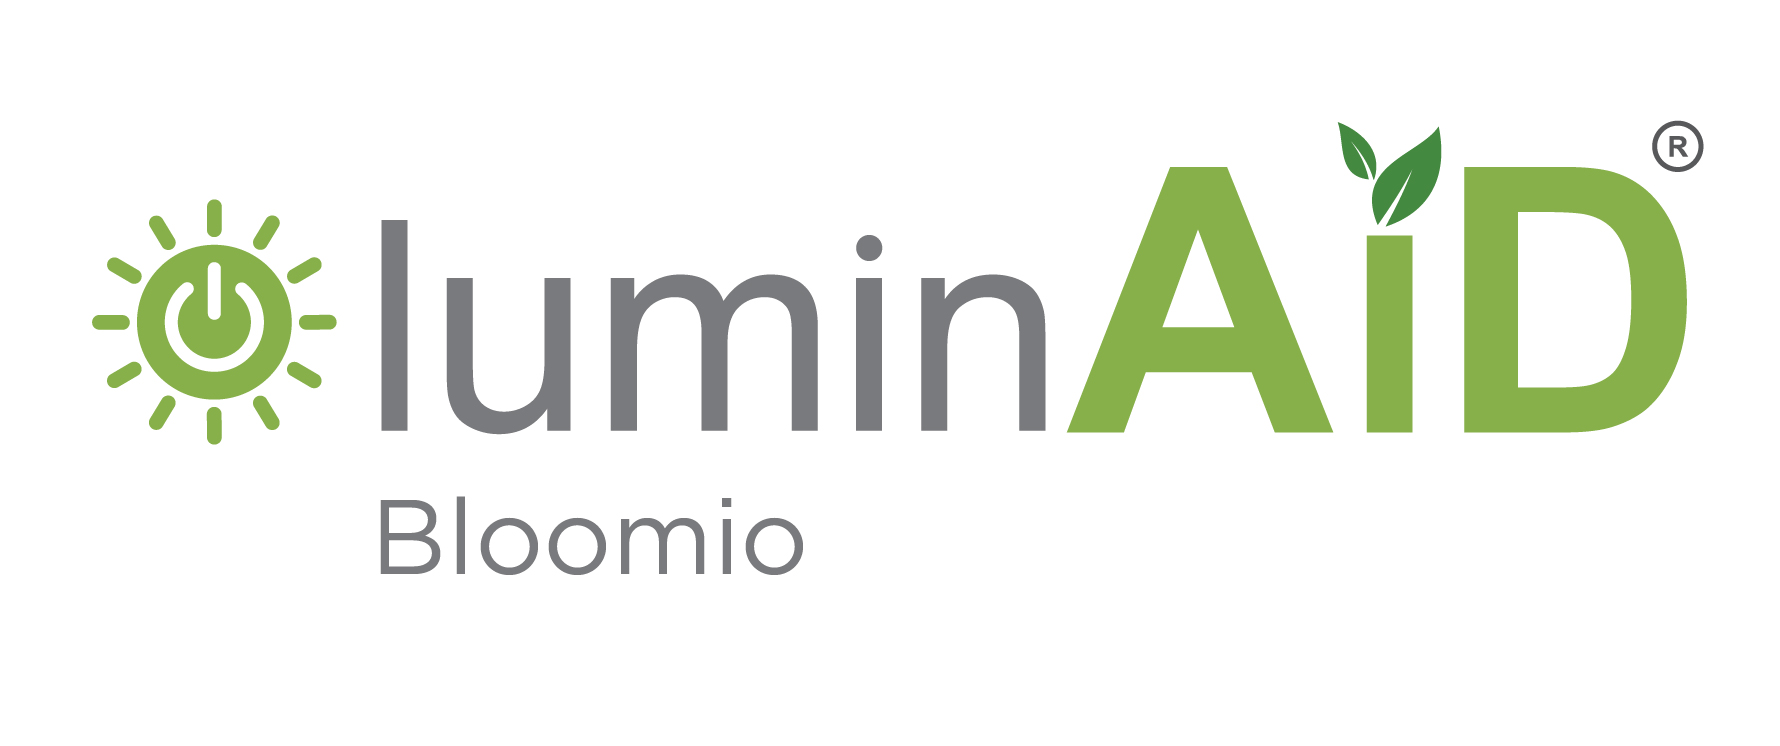 Bloomio by LuminAID